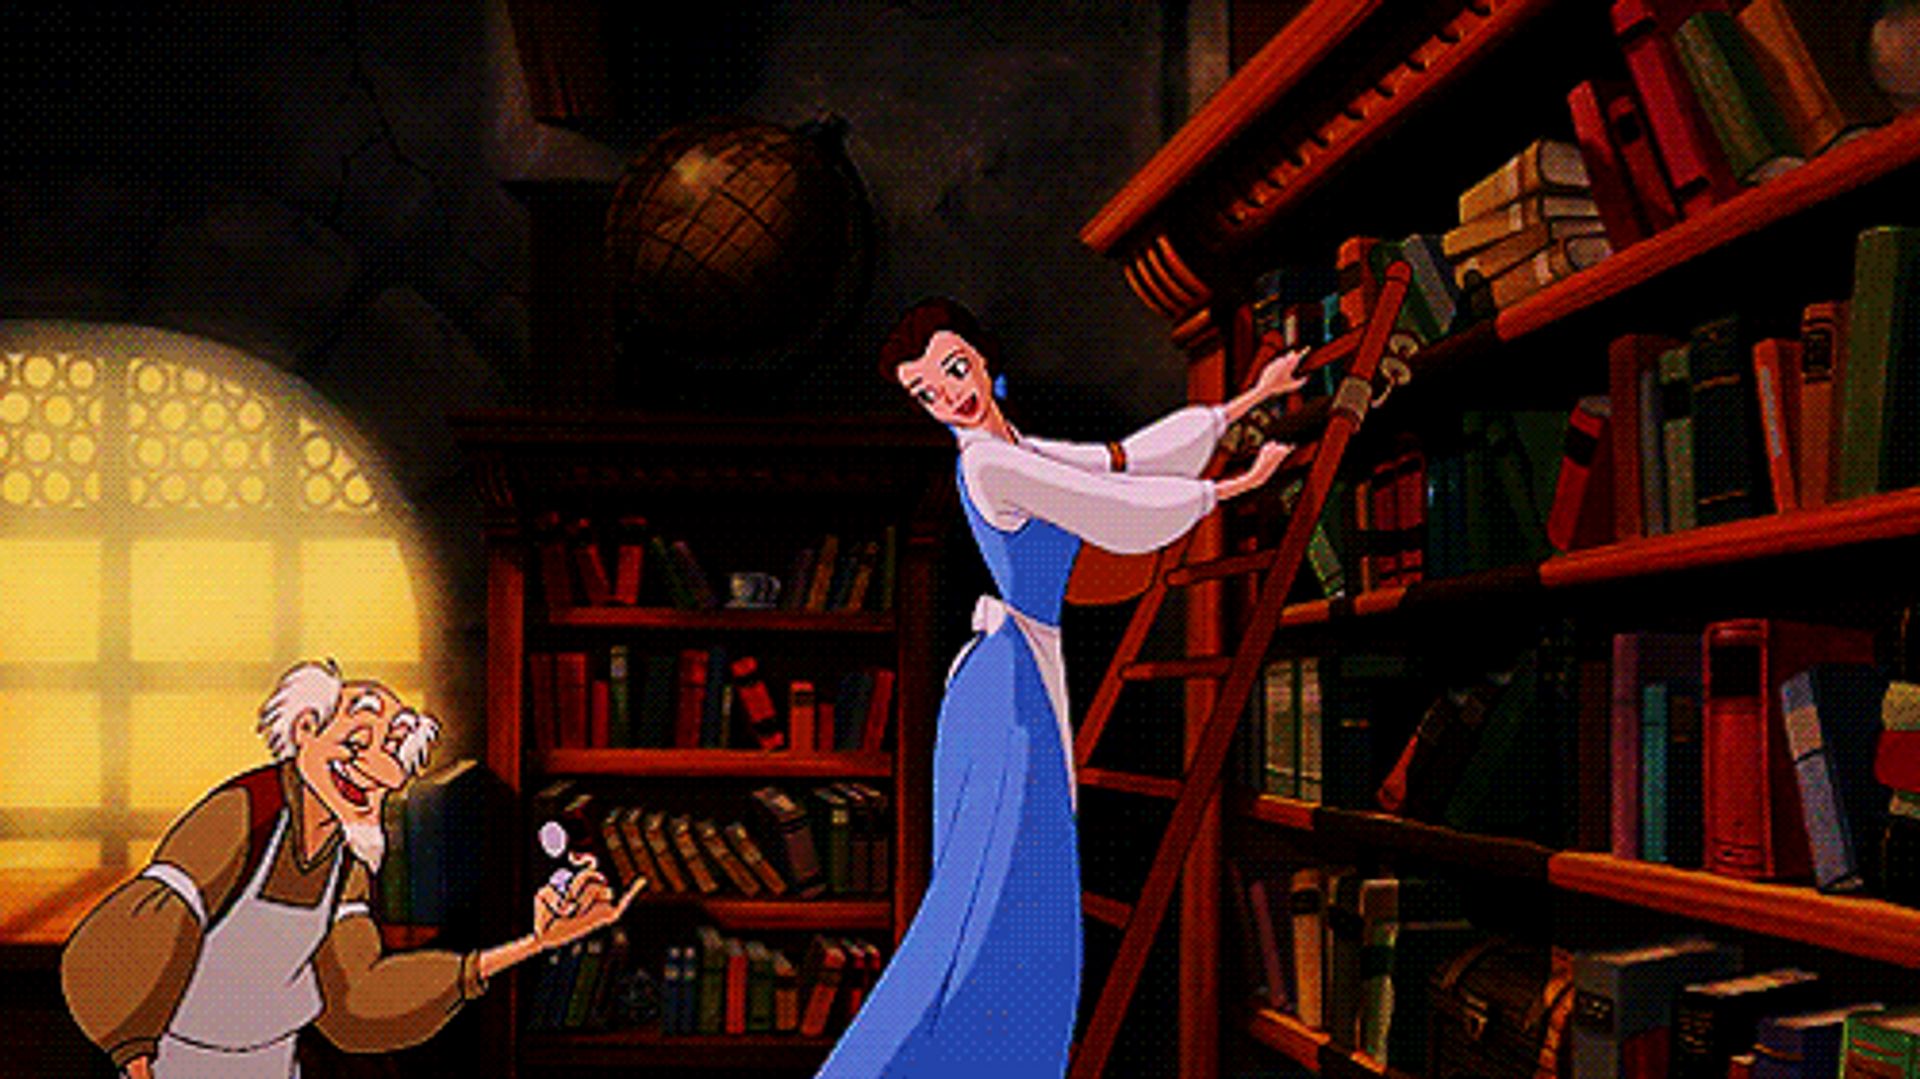 Animation books. Библиотека Бель красавица и чудовище. Красавица и чудовище Белль в библиотеке. Красавица и чудовище Бель с книгой. Бель в библиотеке чудовища.